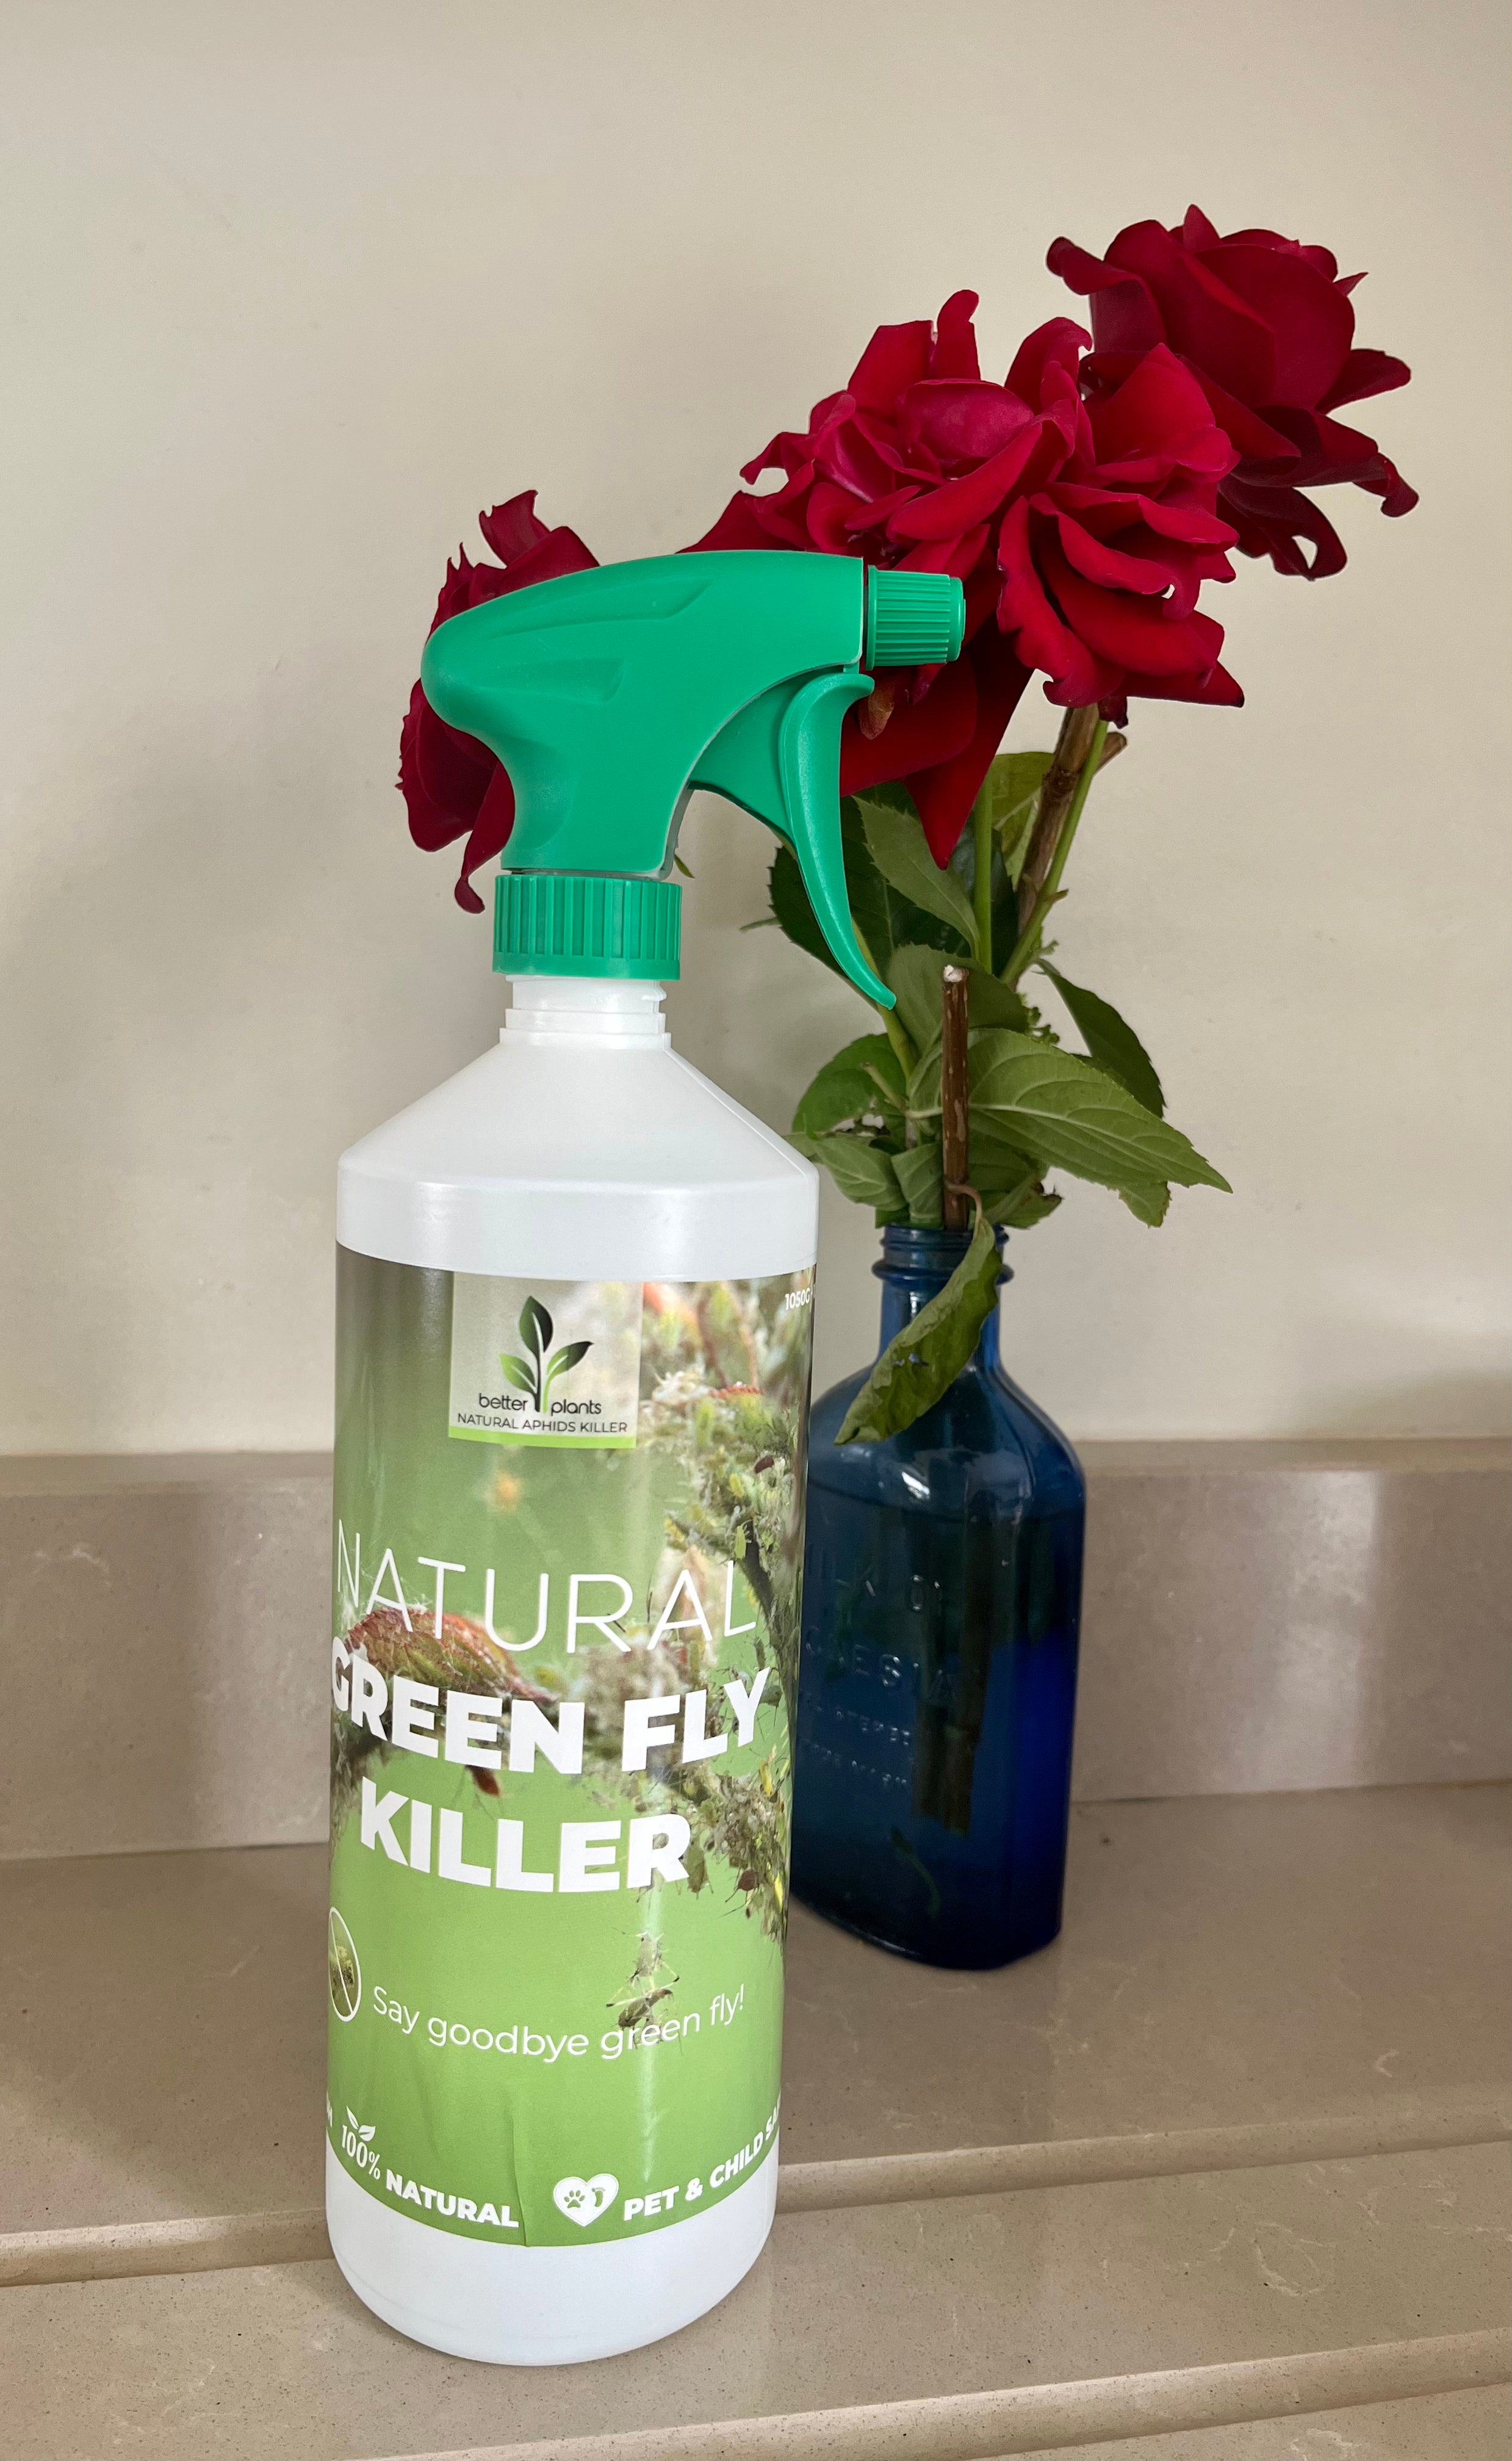 Green Fly killer Big Bottle - 1lt Natural 100% Irish